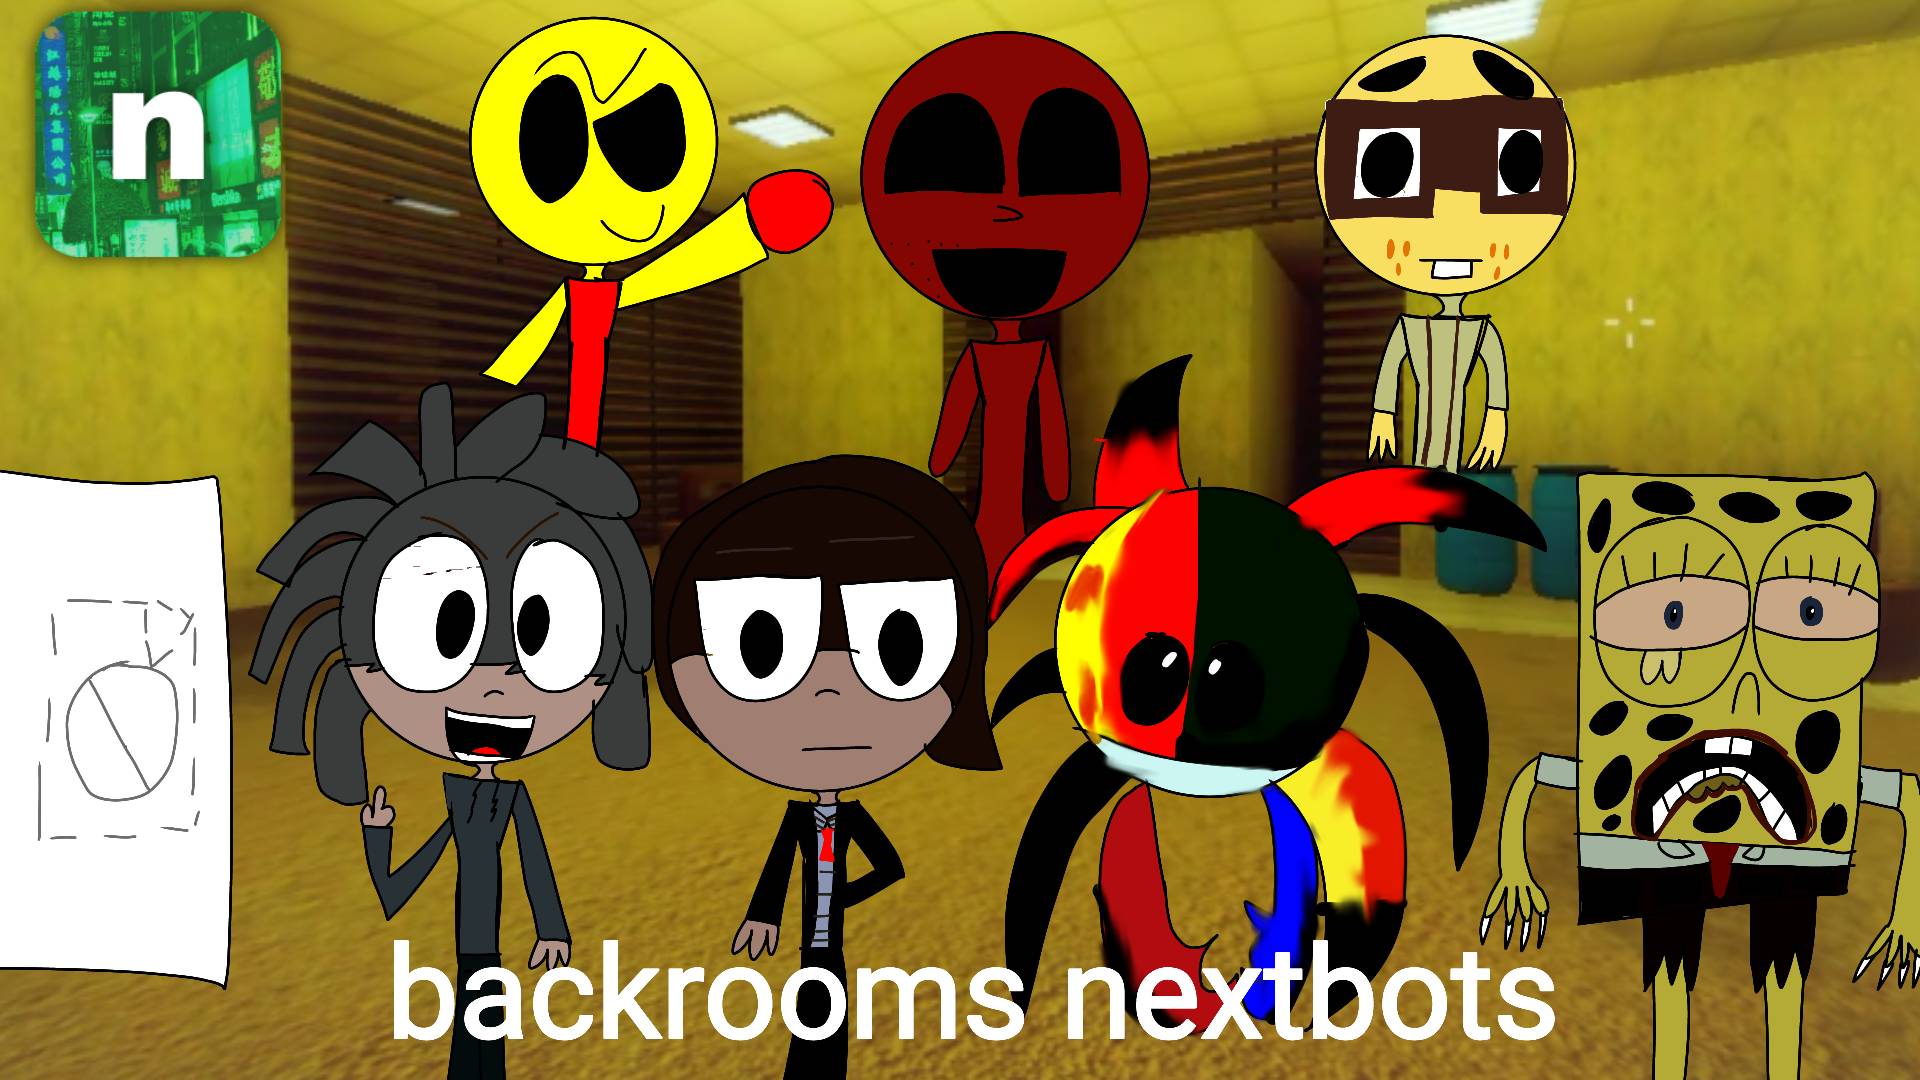 hey nico's nextbots! i made it a new nextbot : r/nicosnextbots